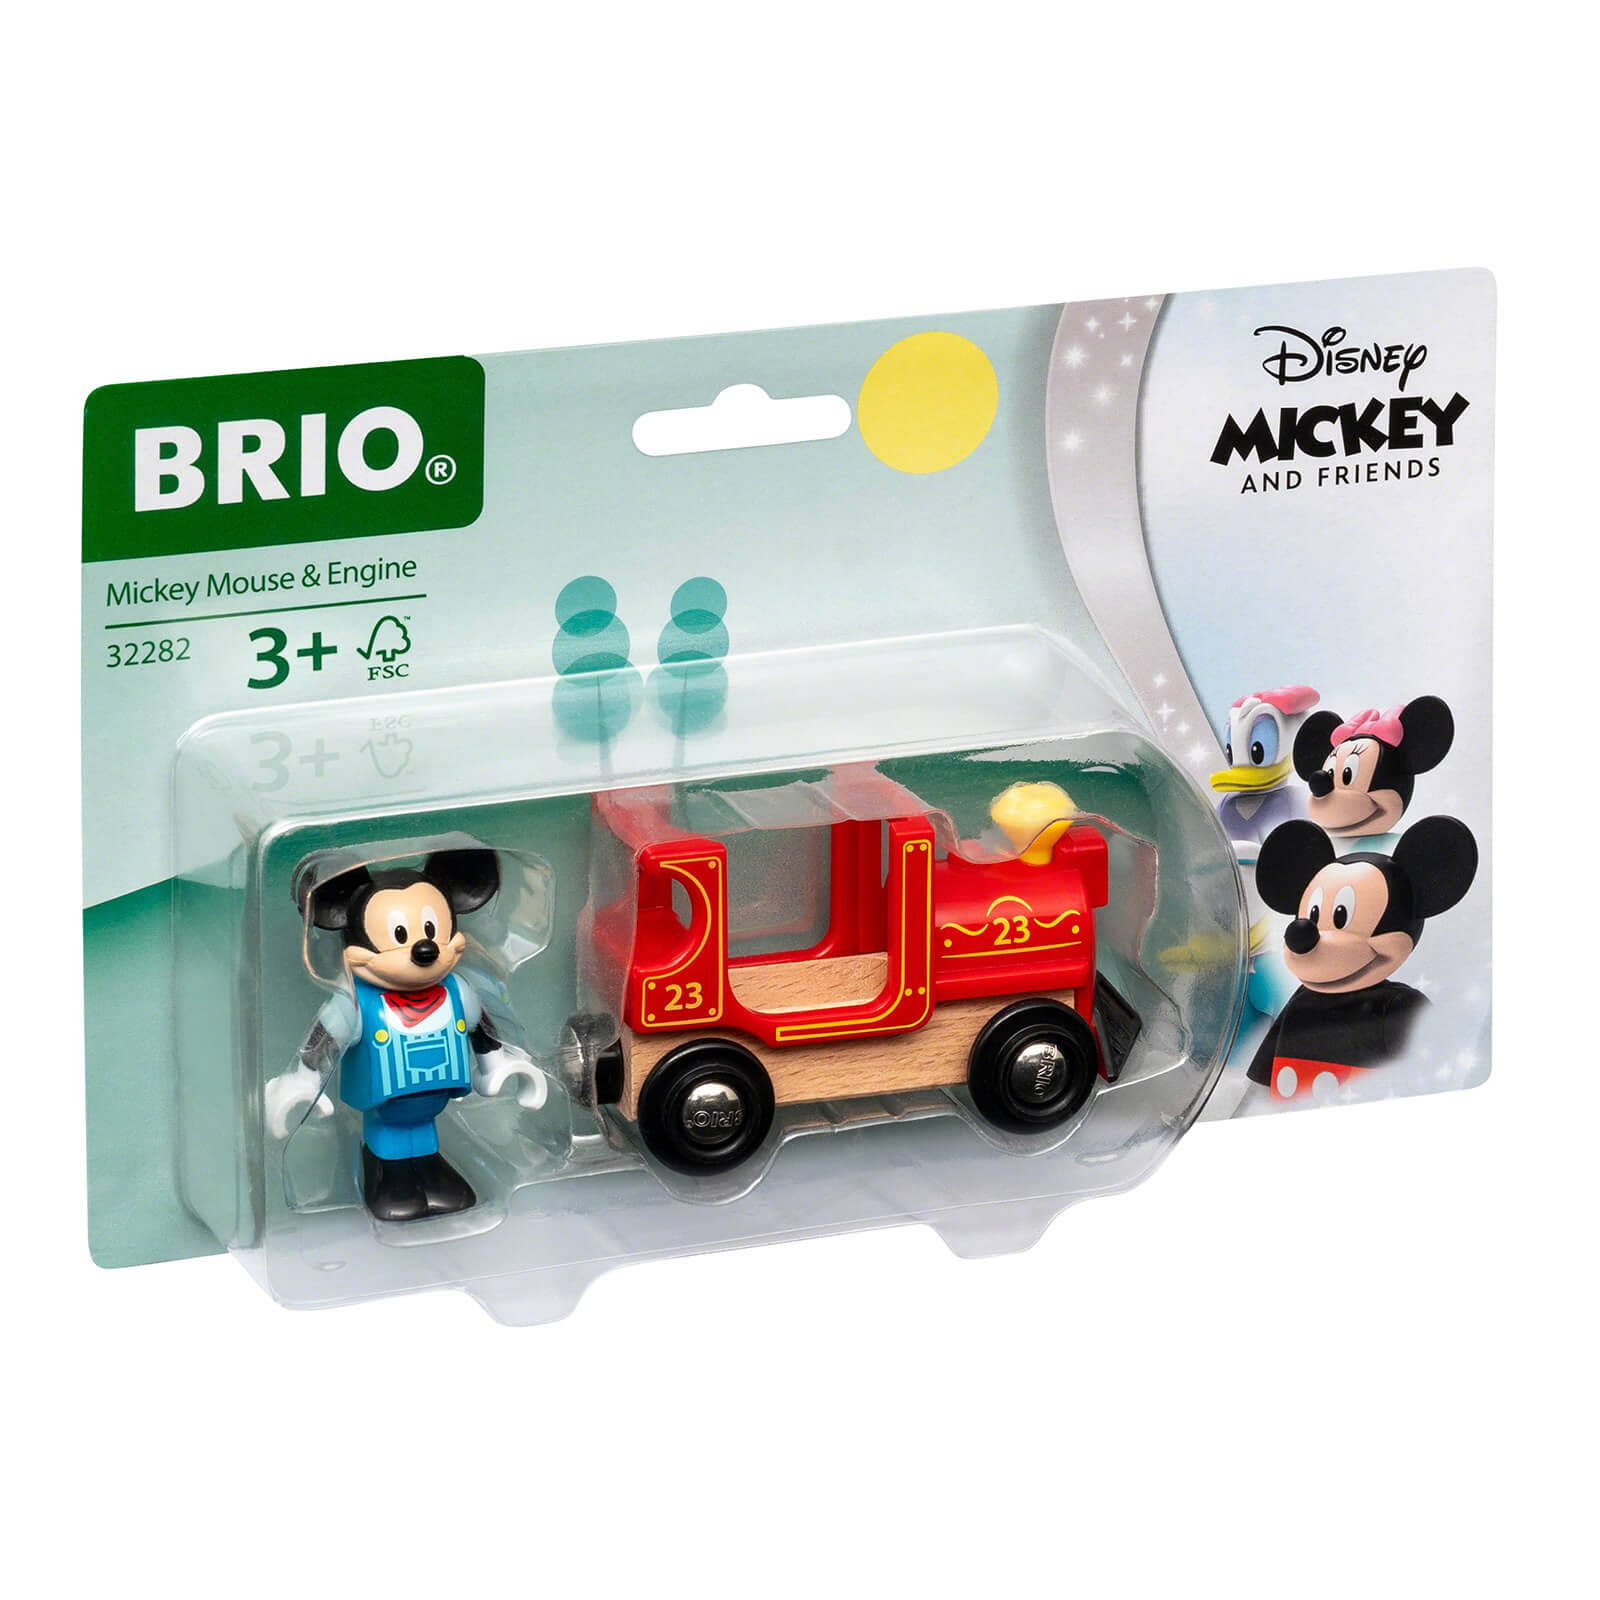 Brio 32282 Mickey Mouse & Engine